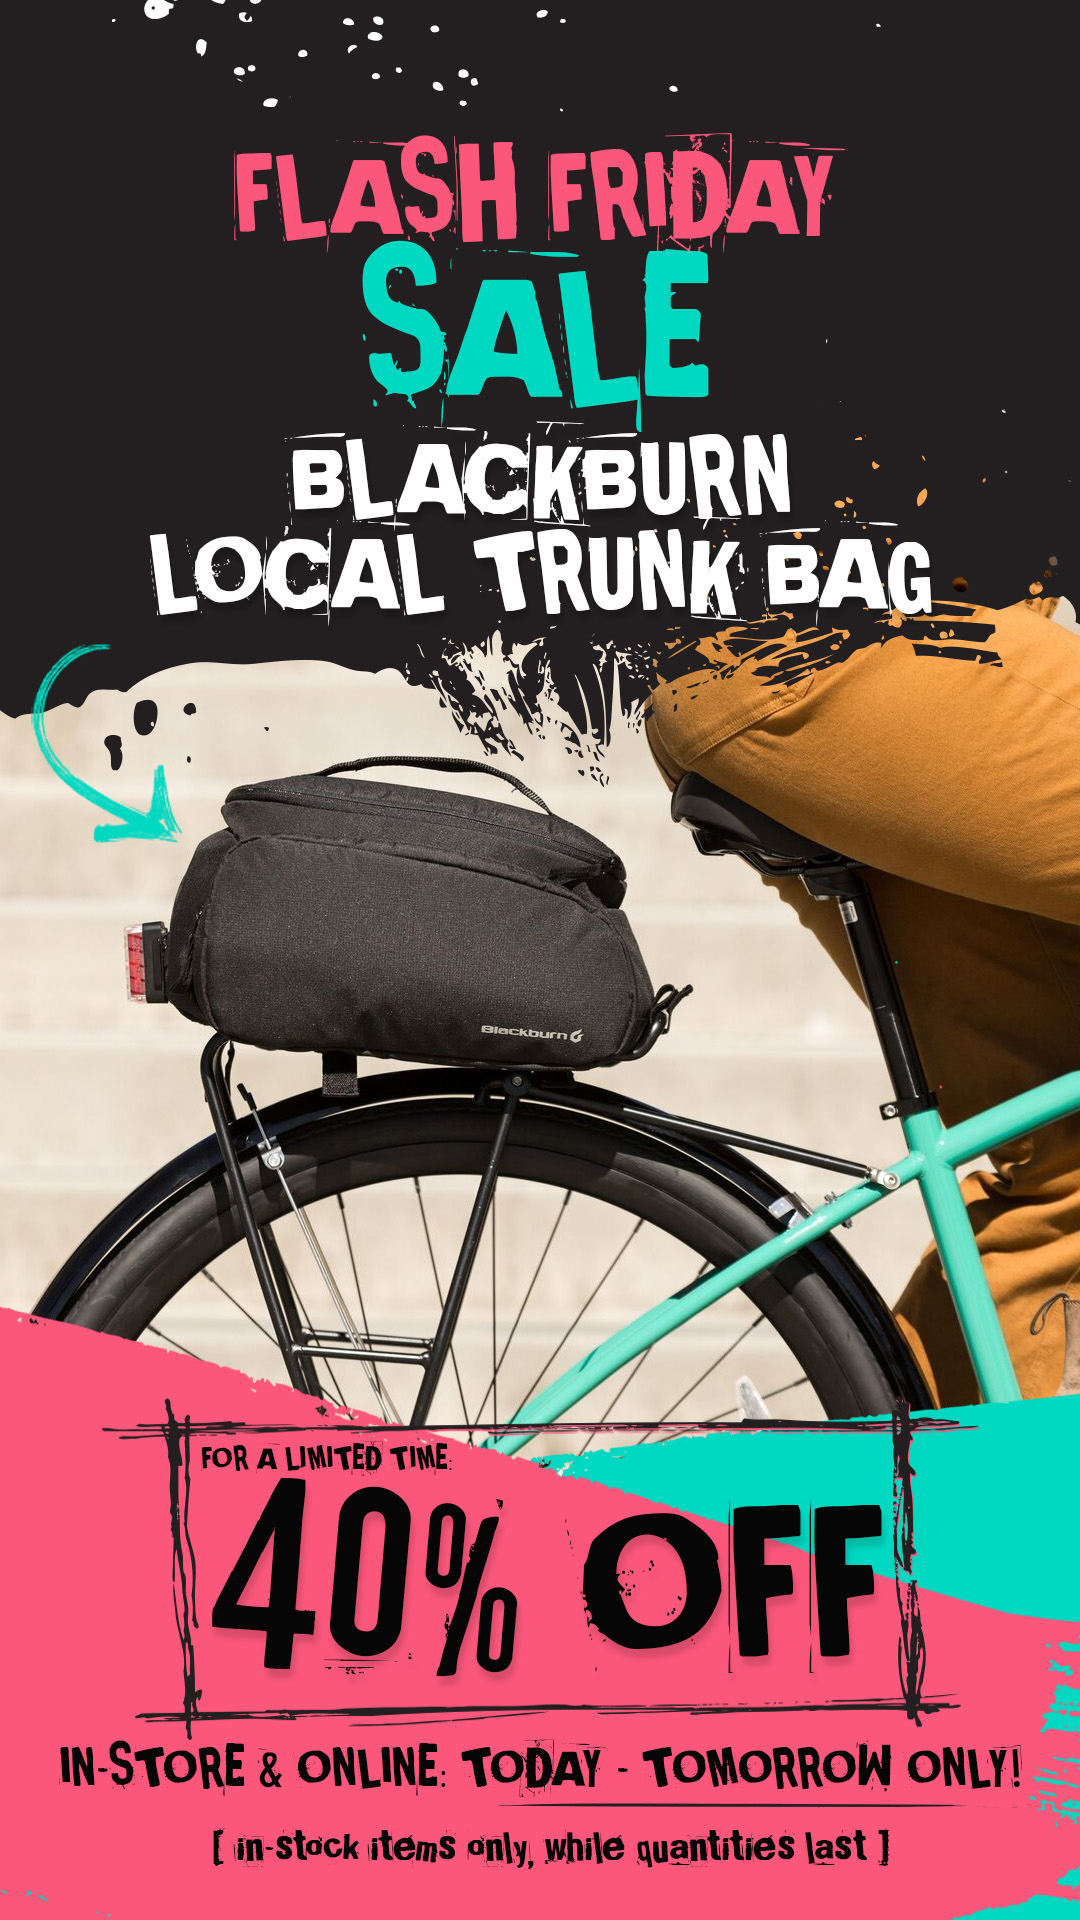 Blackburn Local Trunk Bag - On Sale